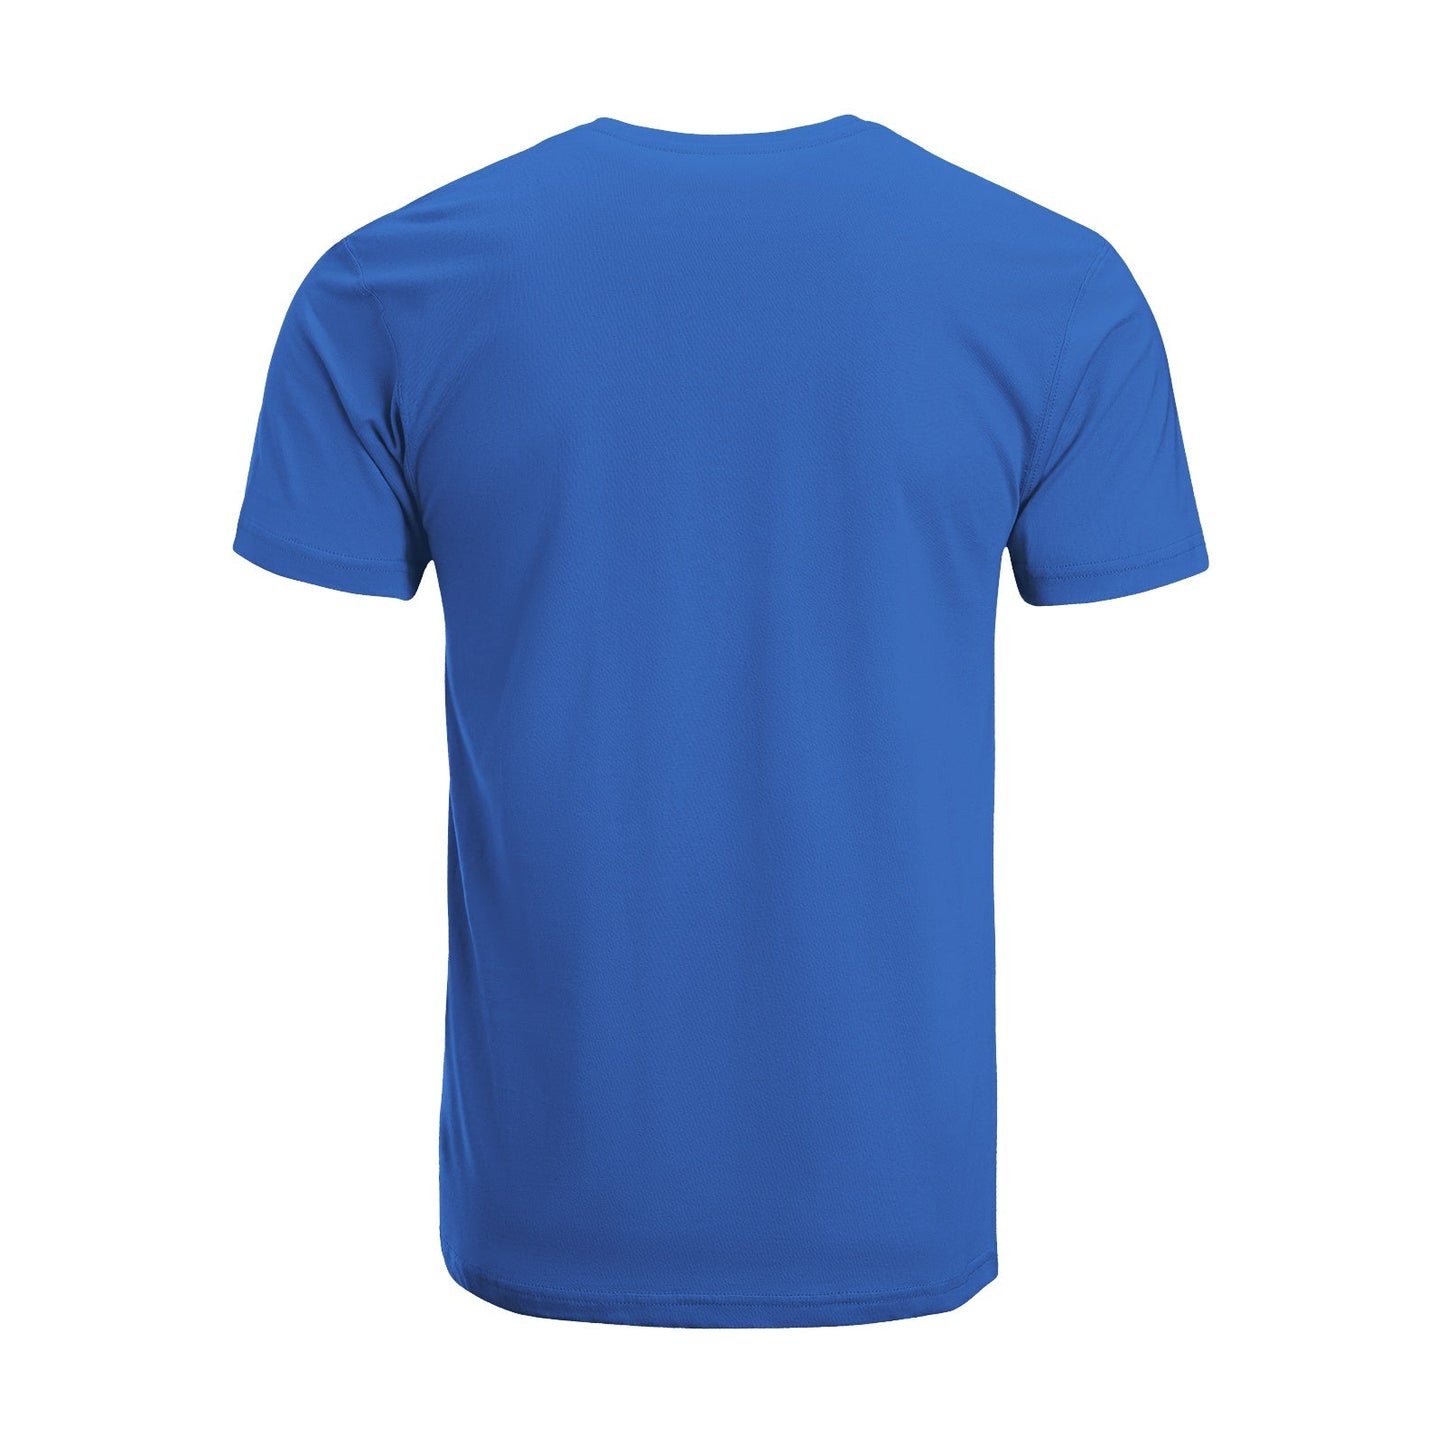 Unisex Short Sleeve Crew Neck Cotton Jersey T-Shirt MOM 16